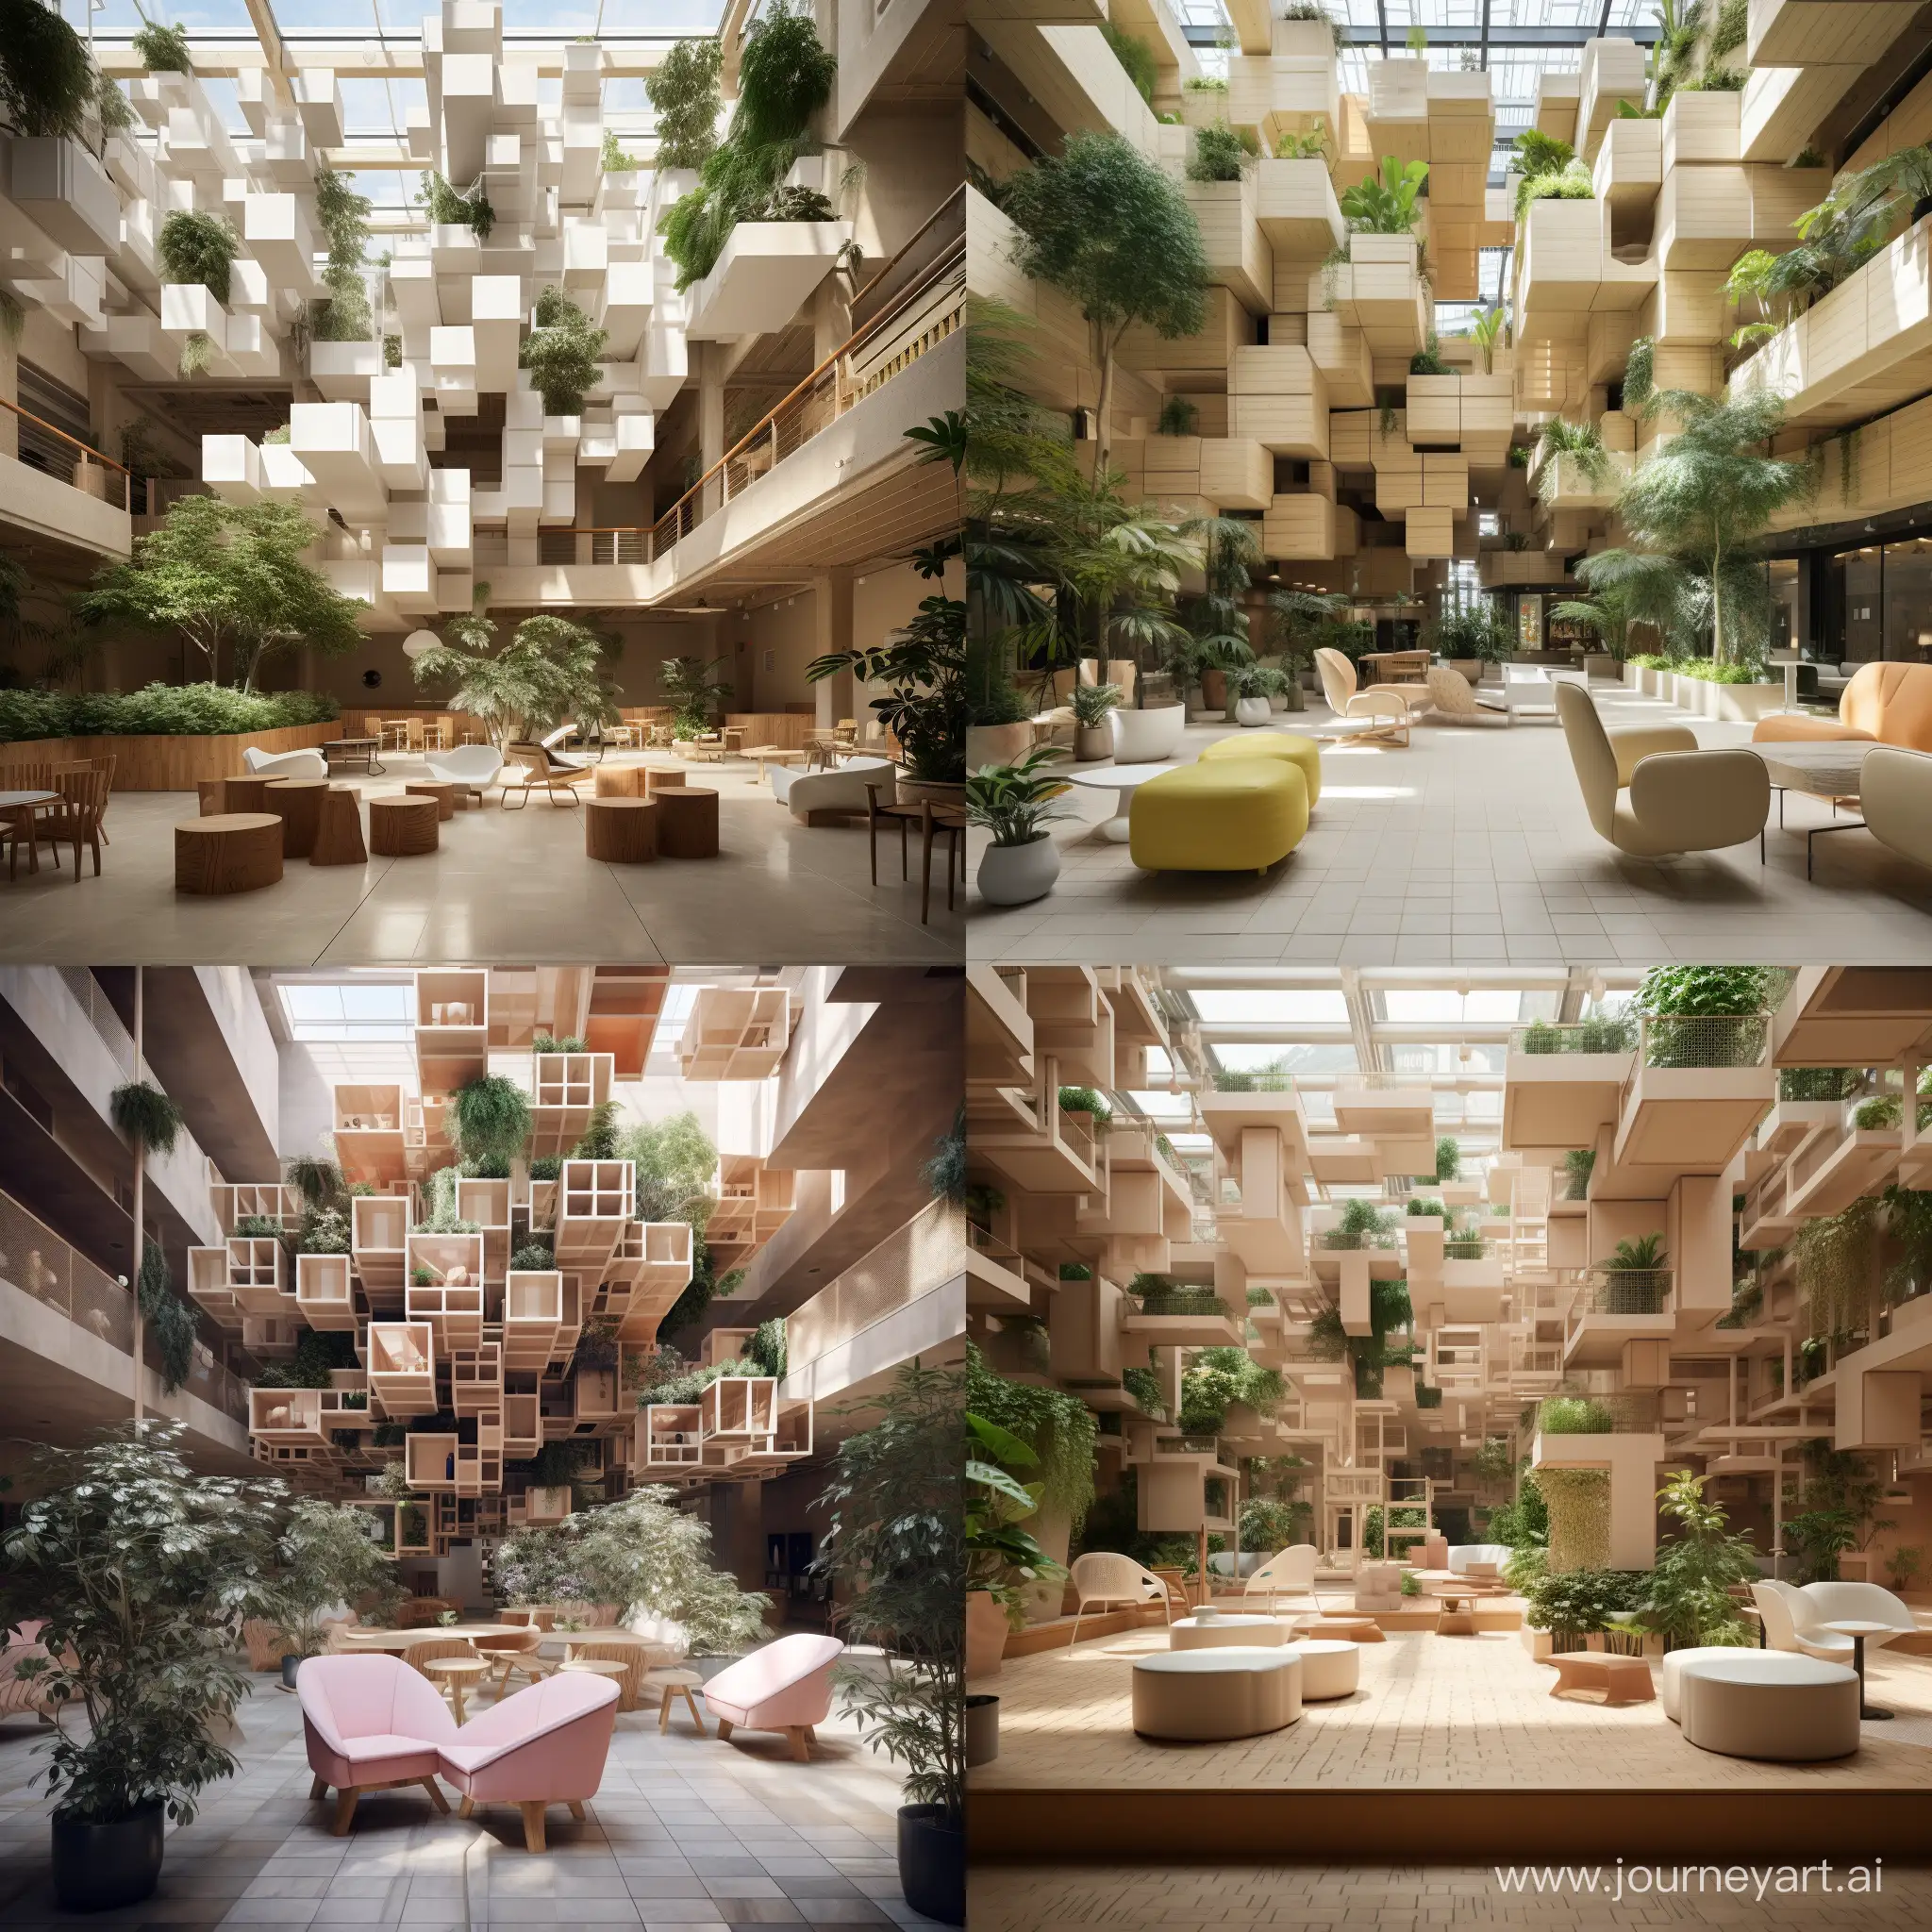 Modern-Atrium-Design-TetrisInspired-Platforms-and-Stylish-Chairs